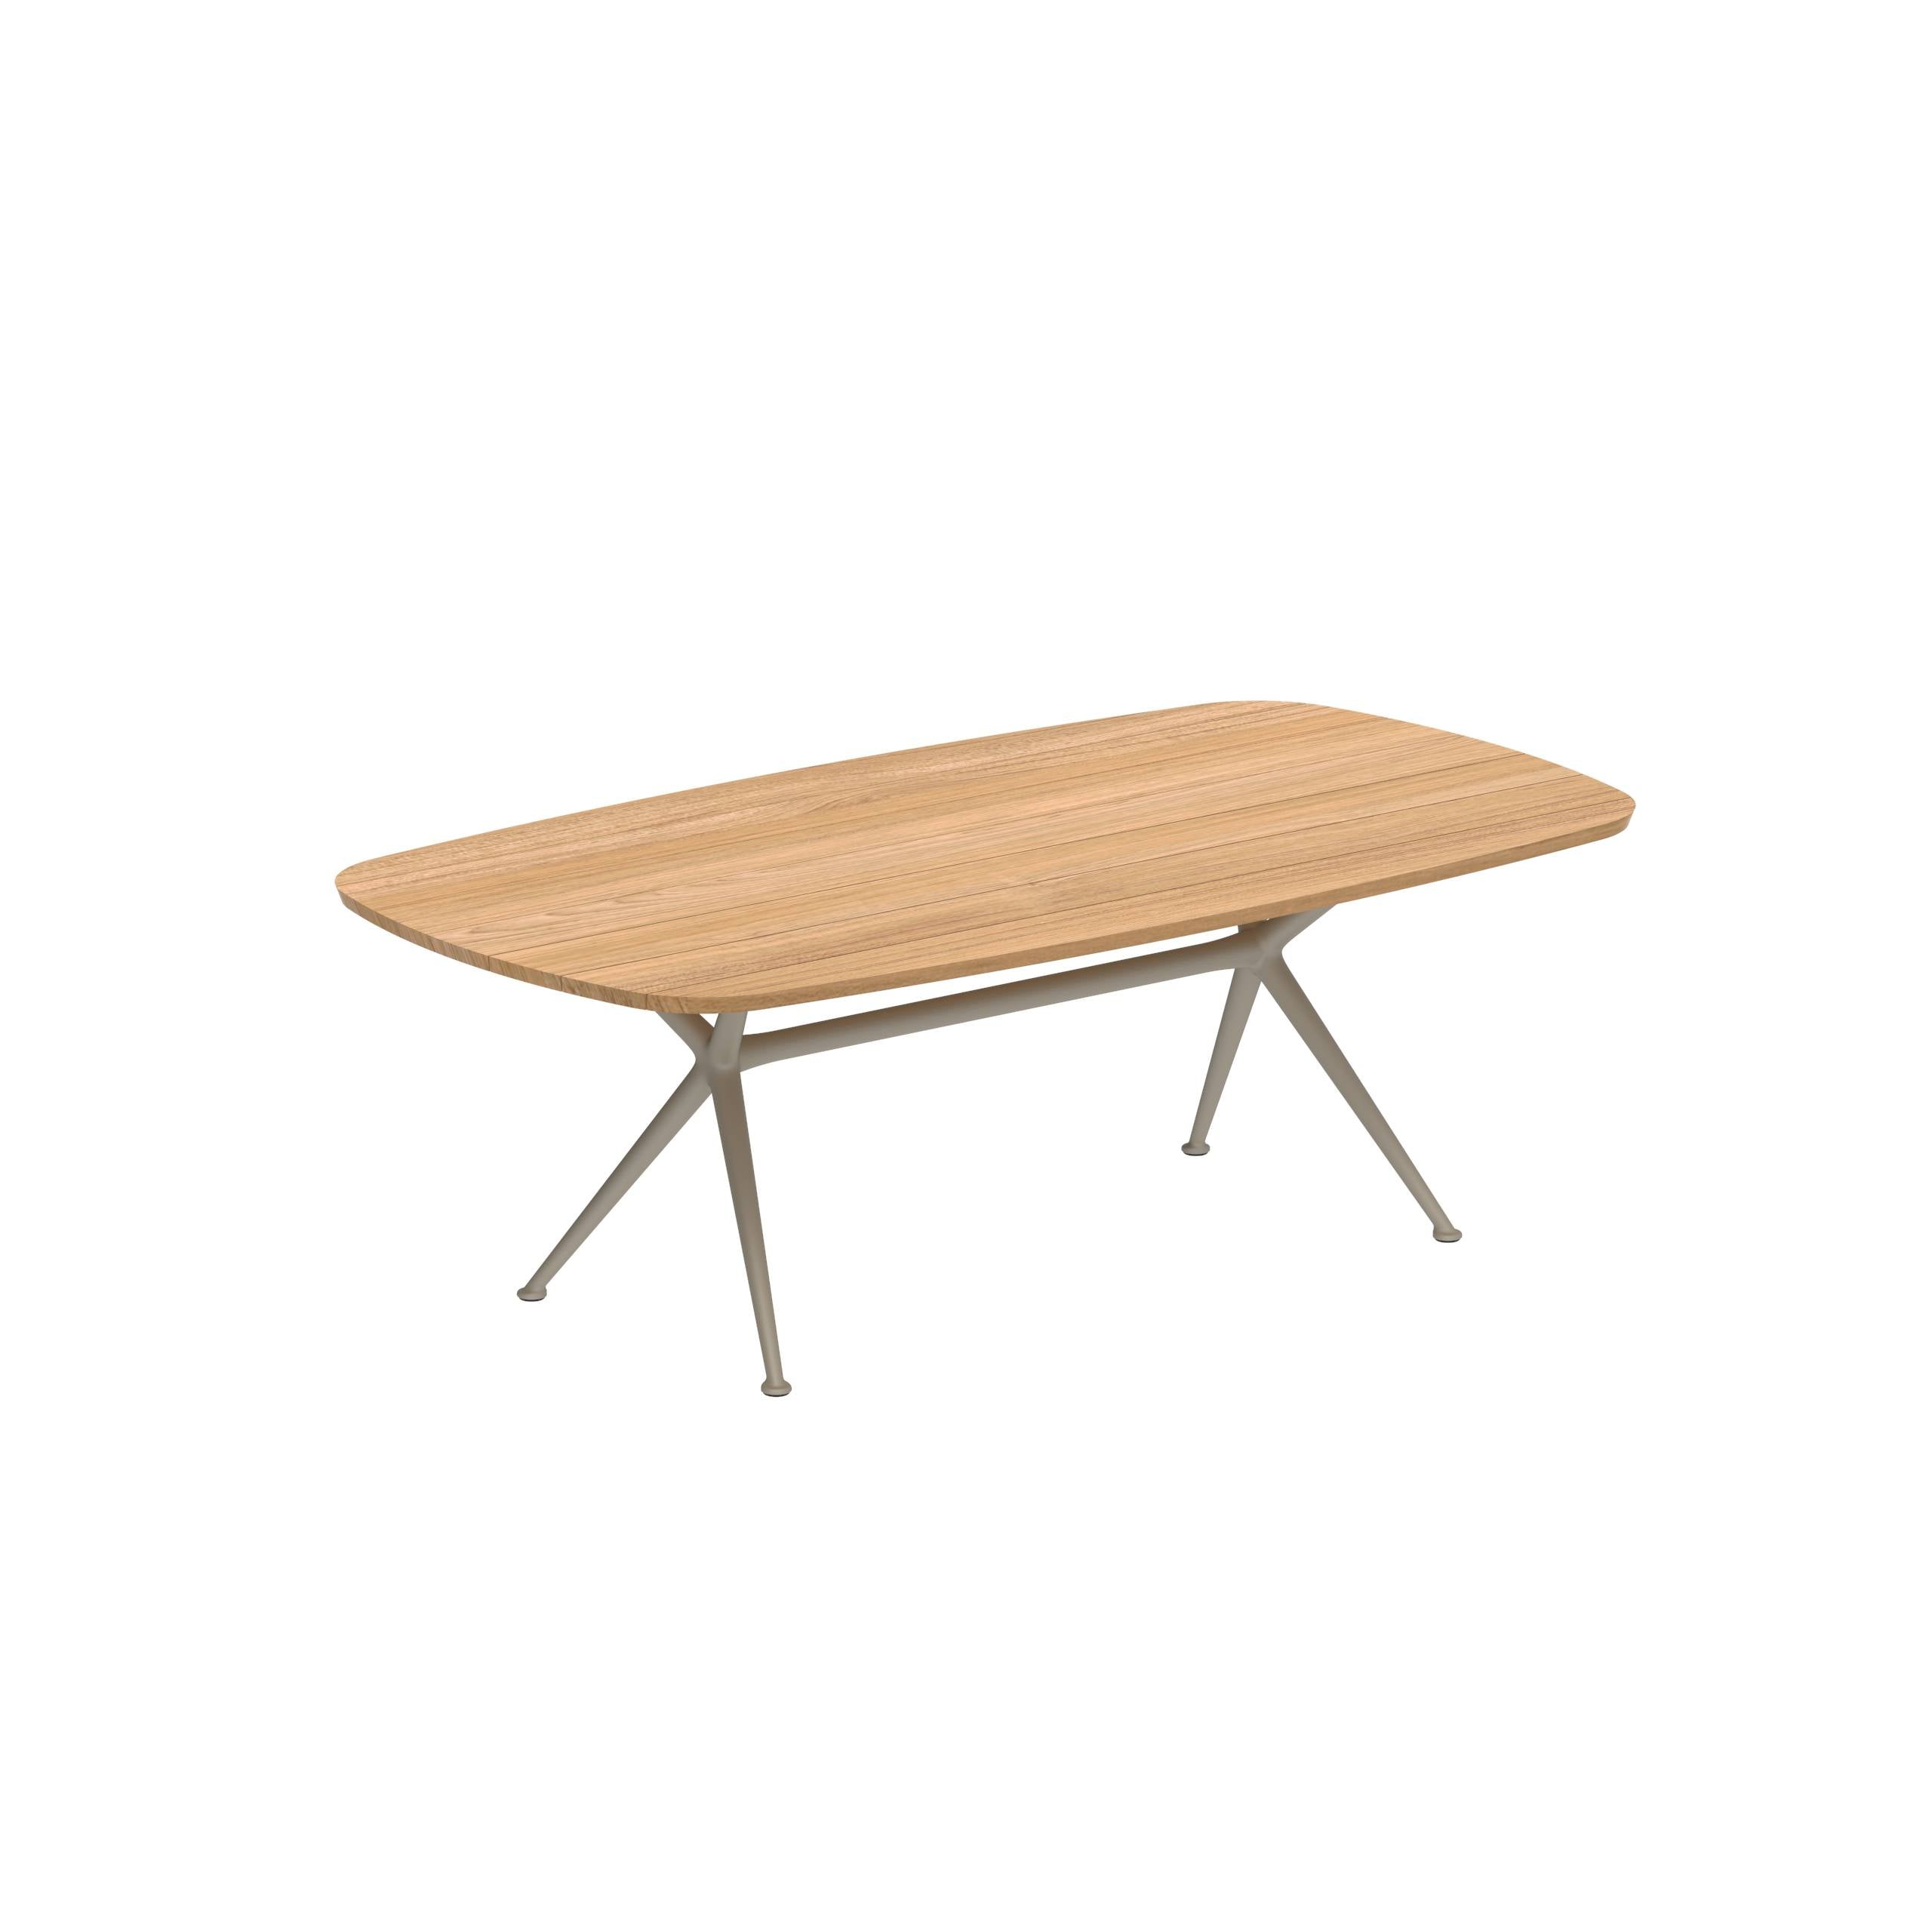 Exes Table 220x120cm Alu Legs Sand - Teak Table Top